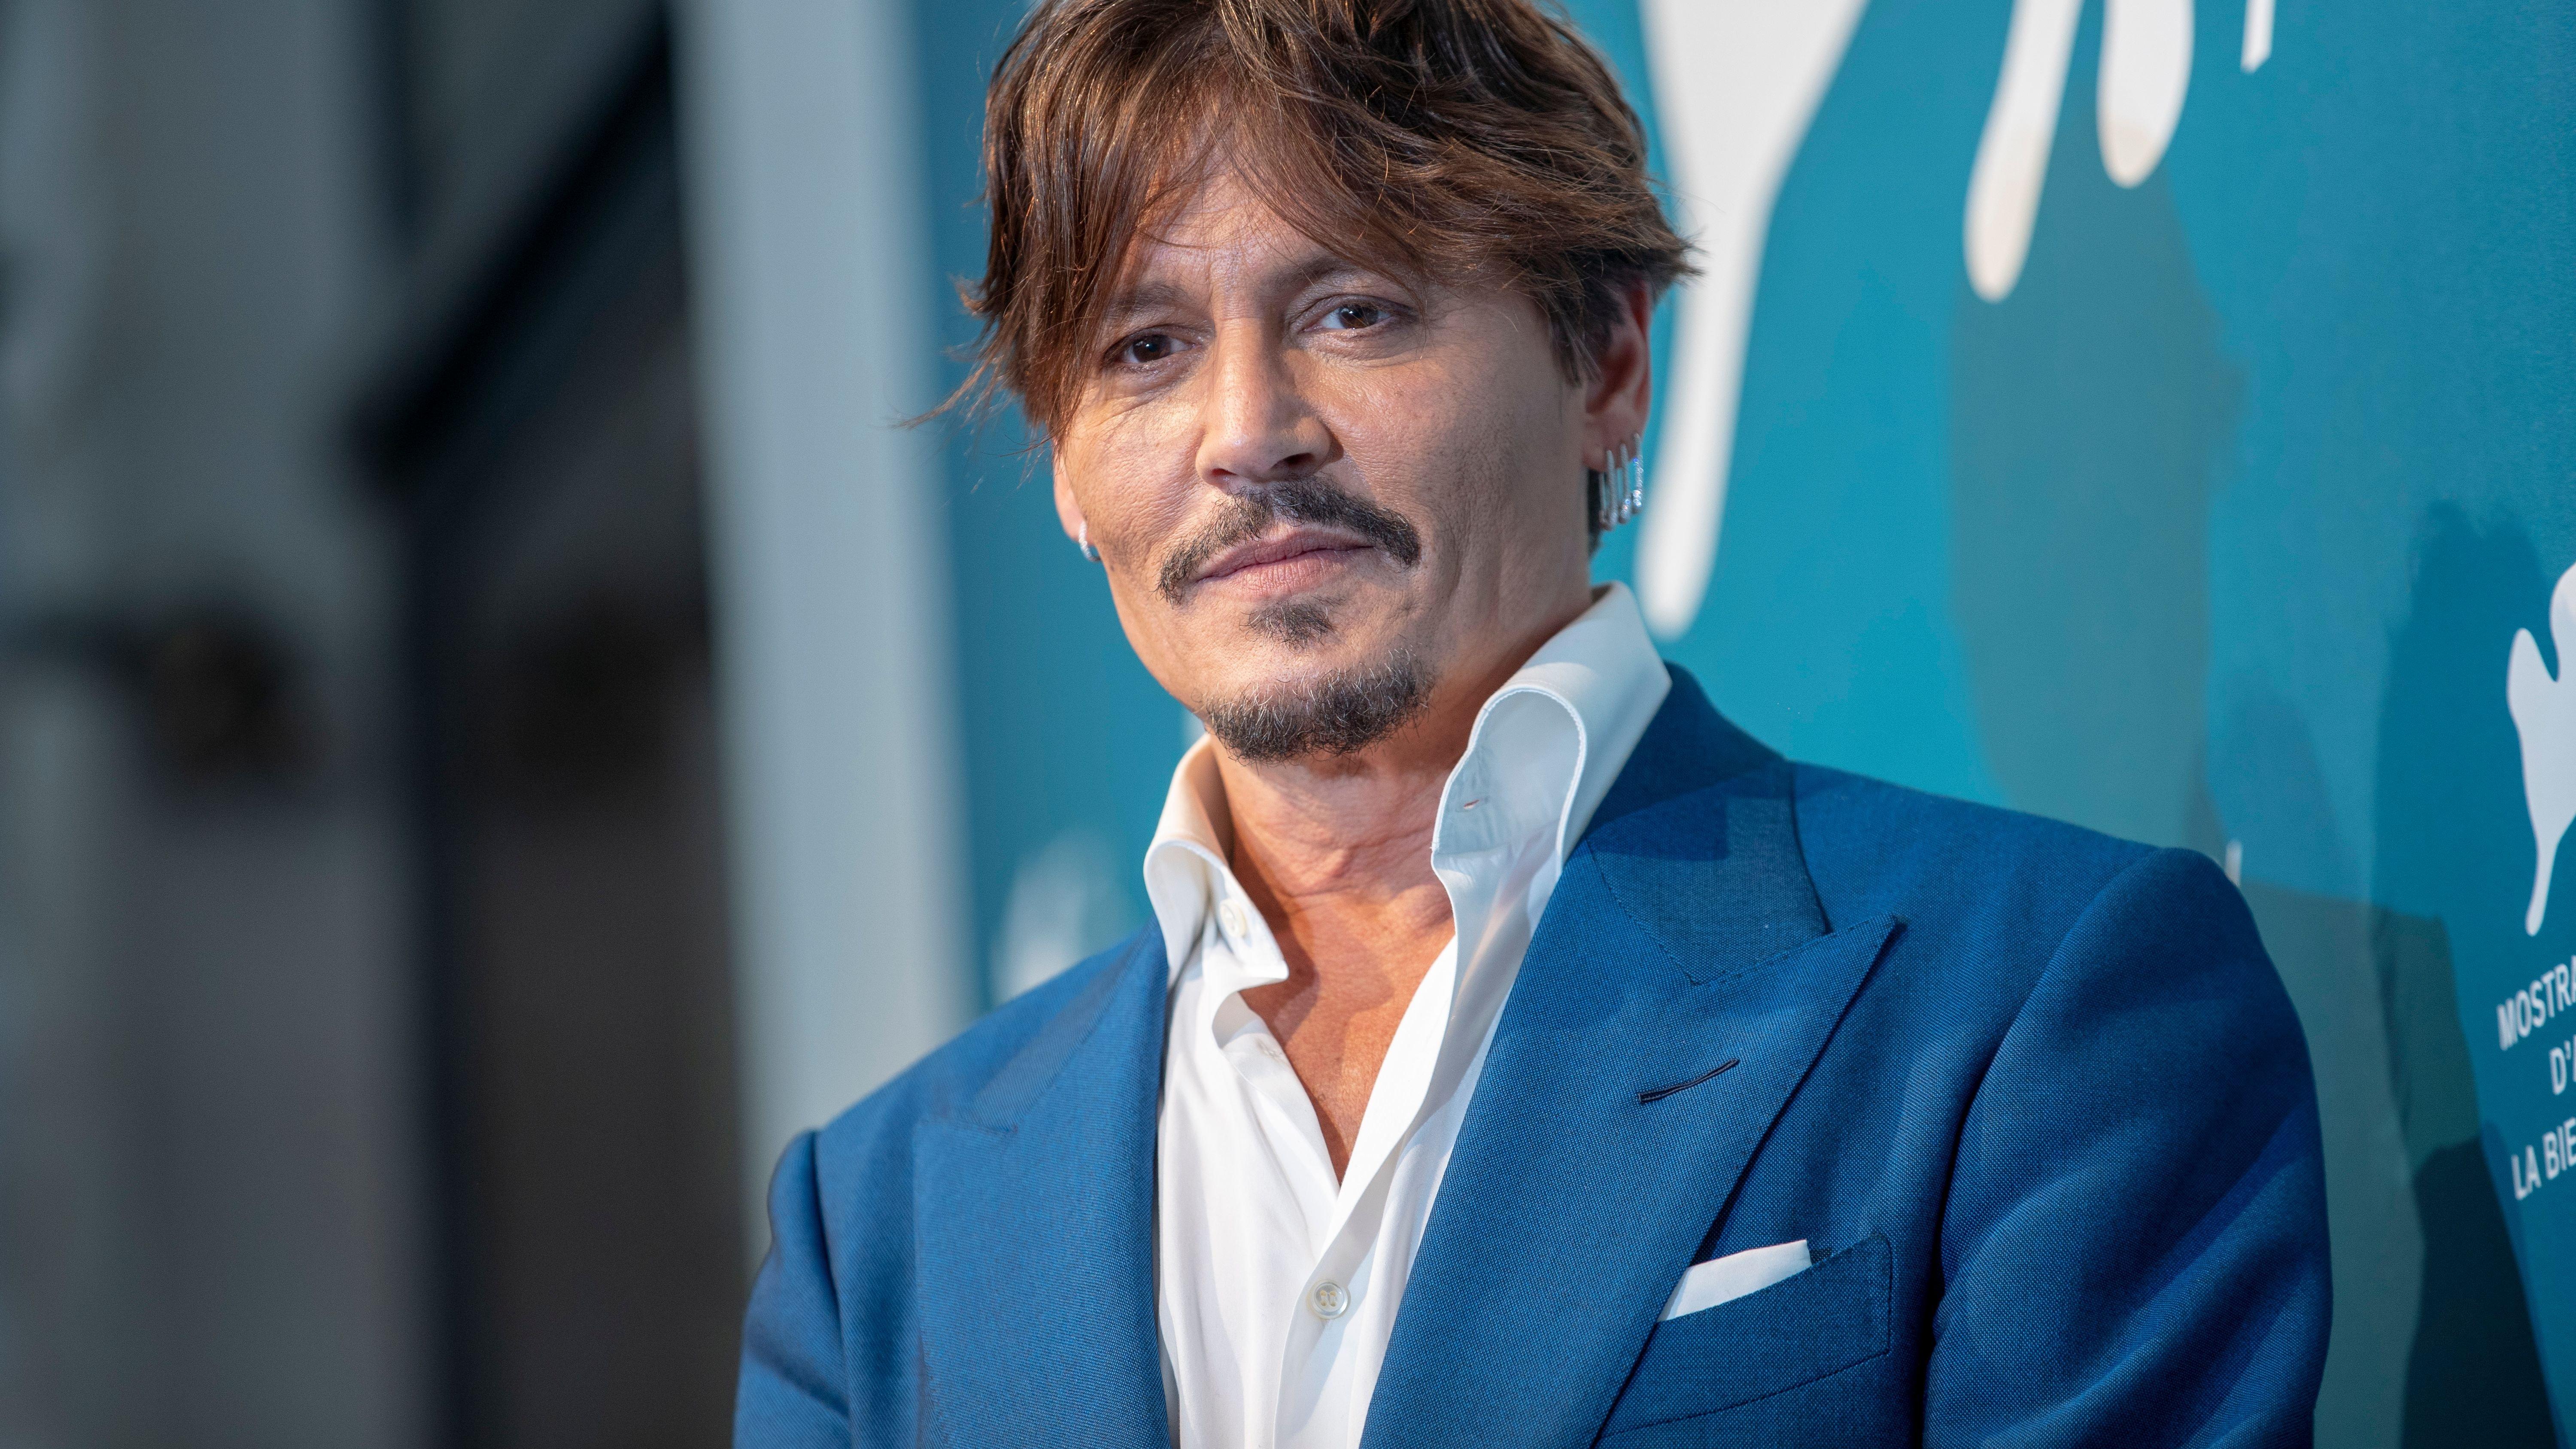 Johnny Depp in blue suit